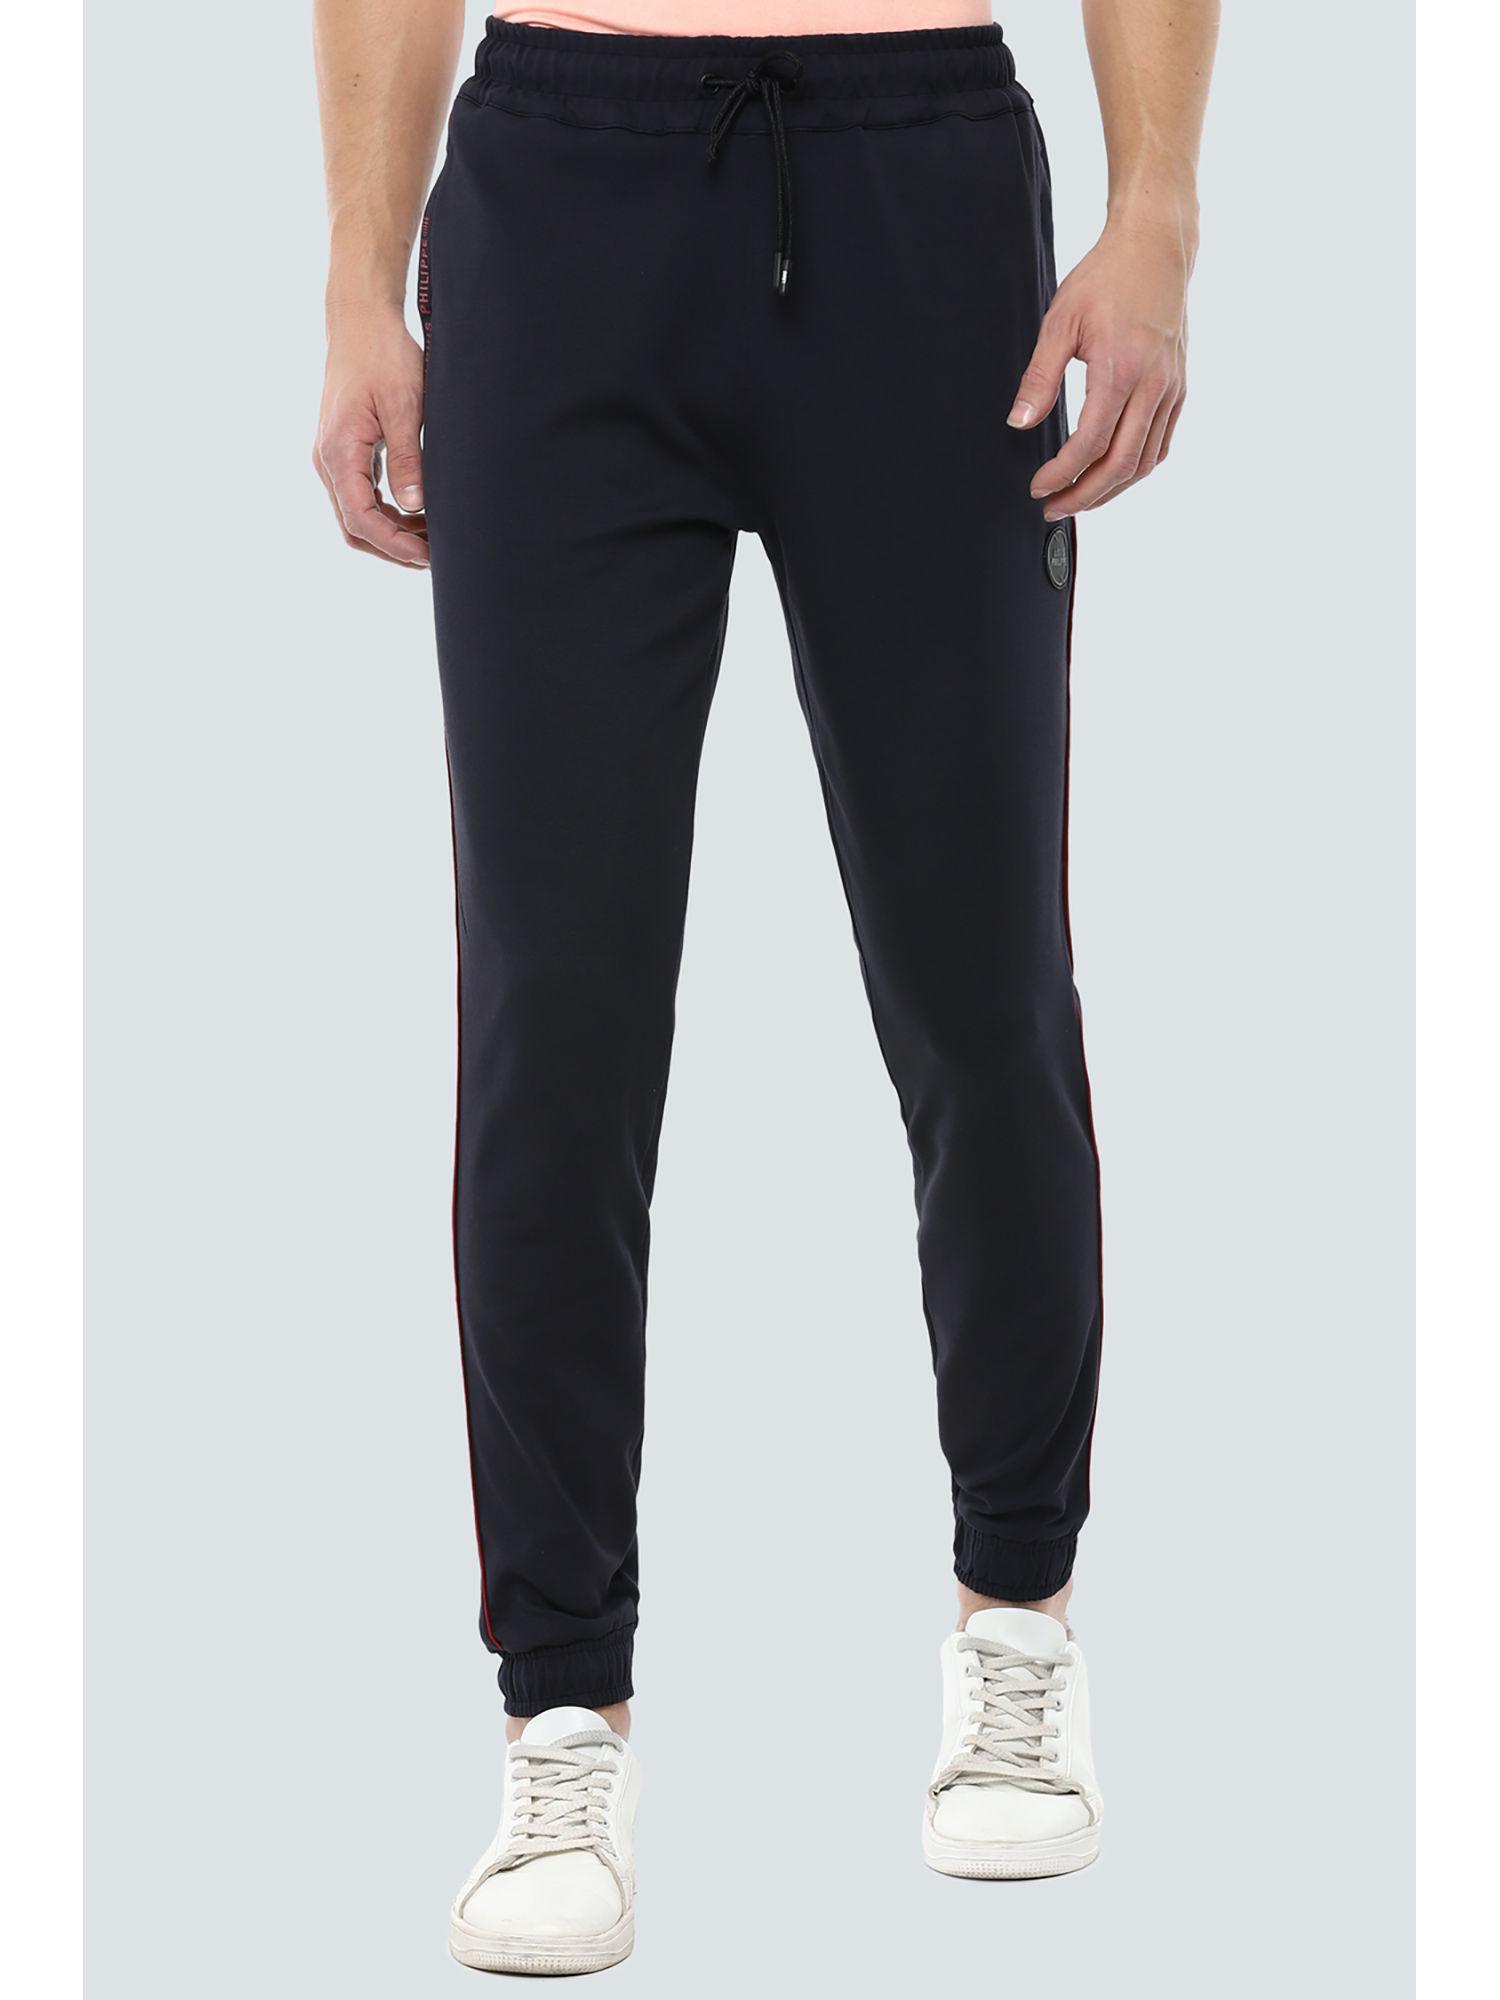 navy blue jogger pants